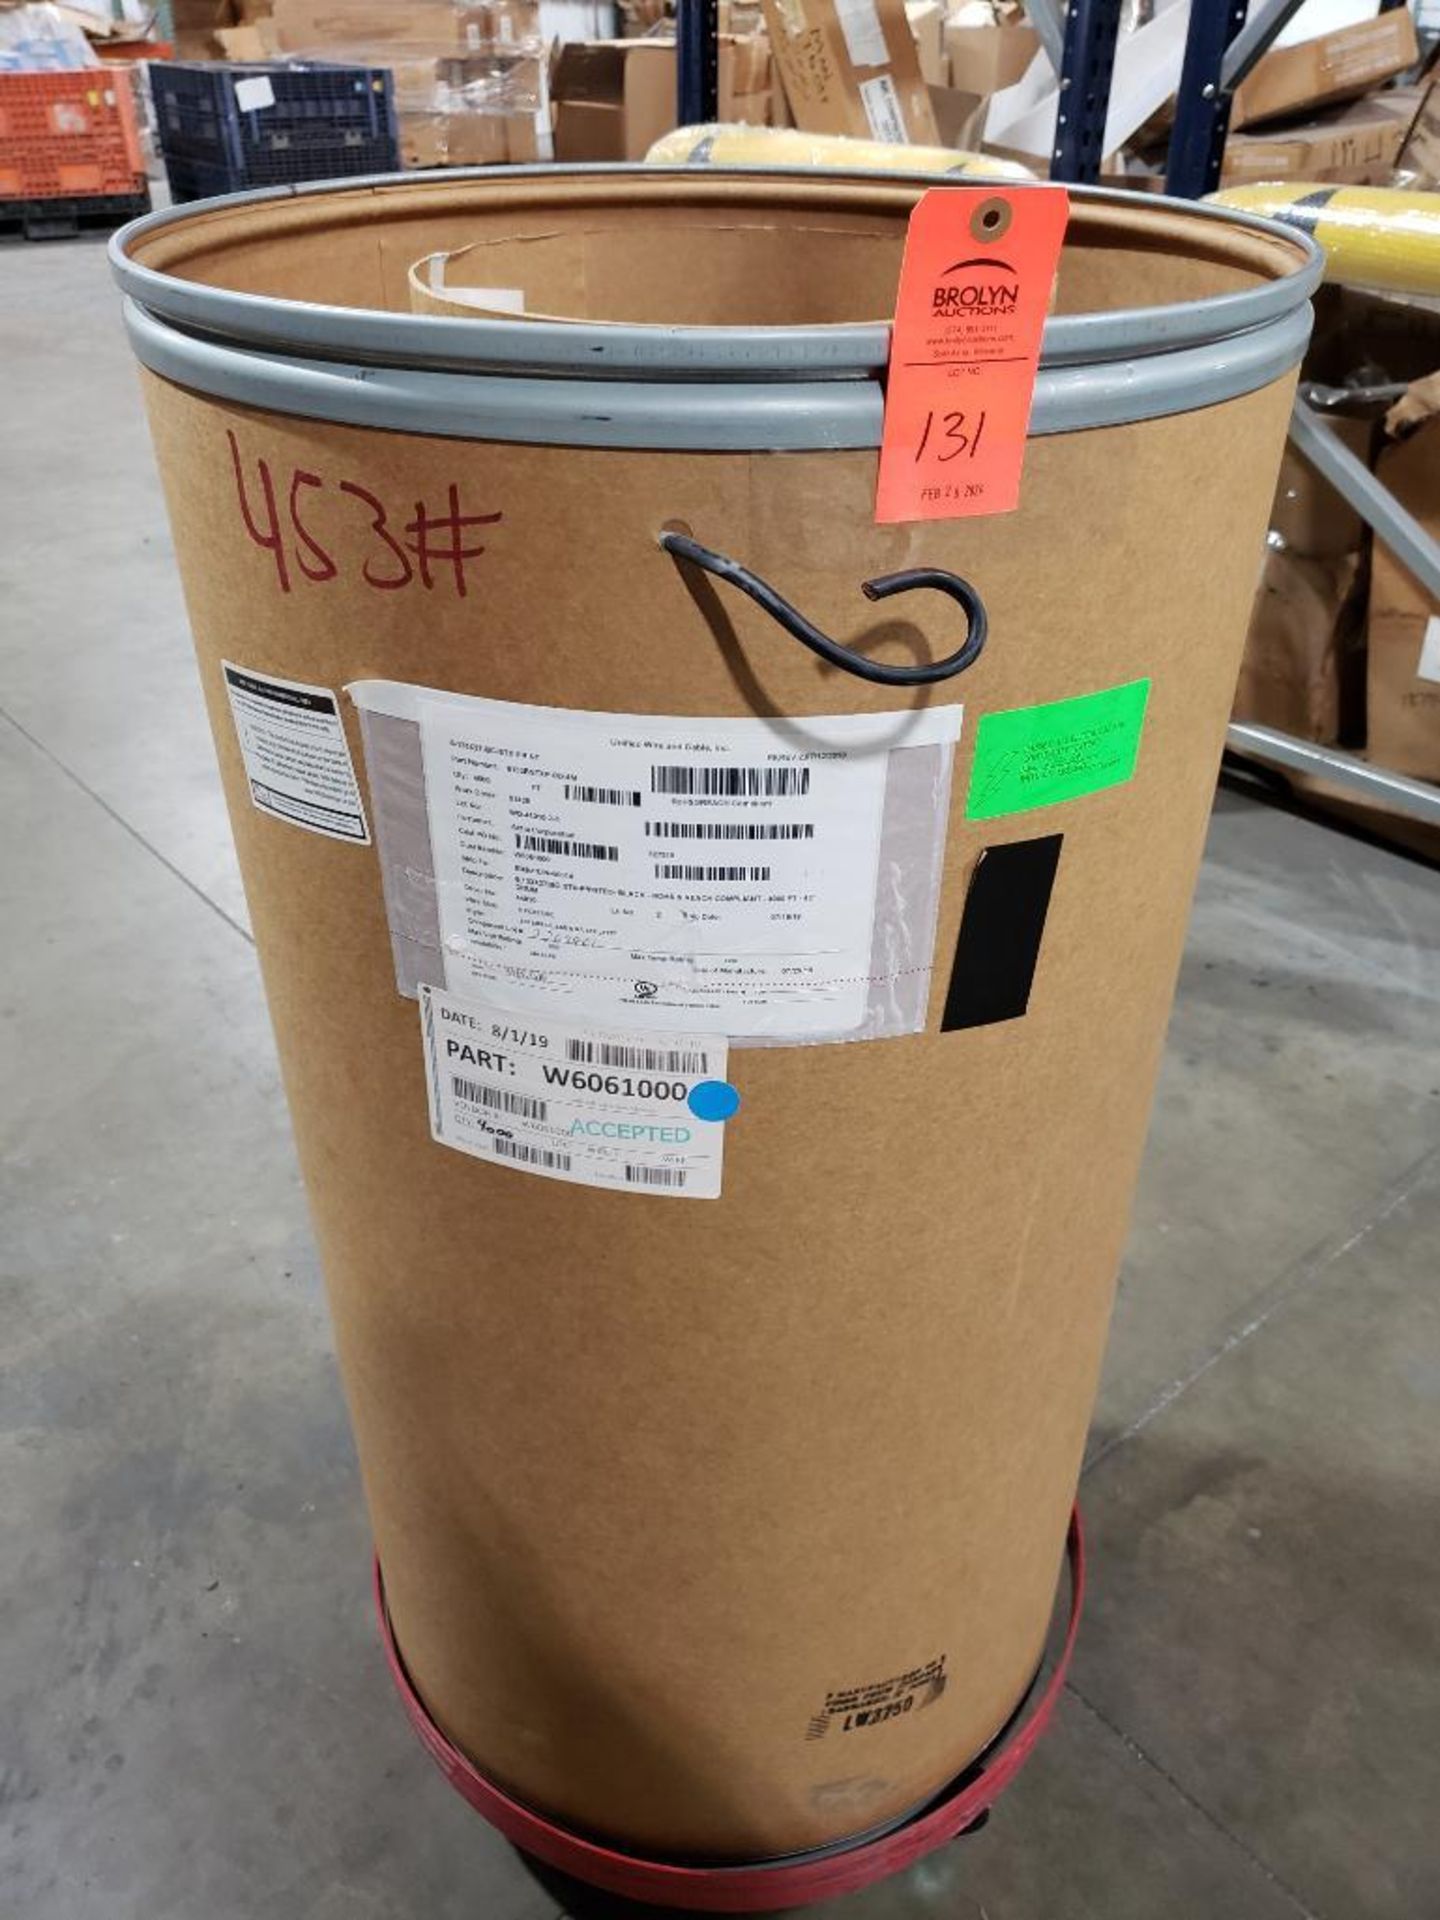 Qty 1 - Barrel 6 awg black print copper wire. Gross barrel weight, 453lbs. Partial barrel.